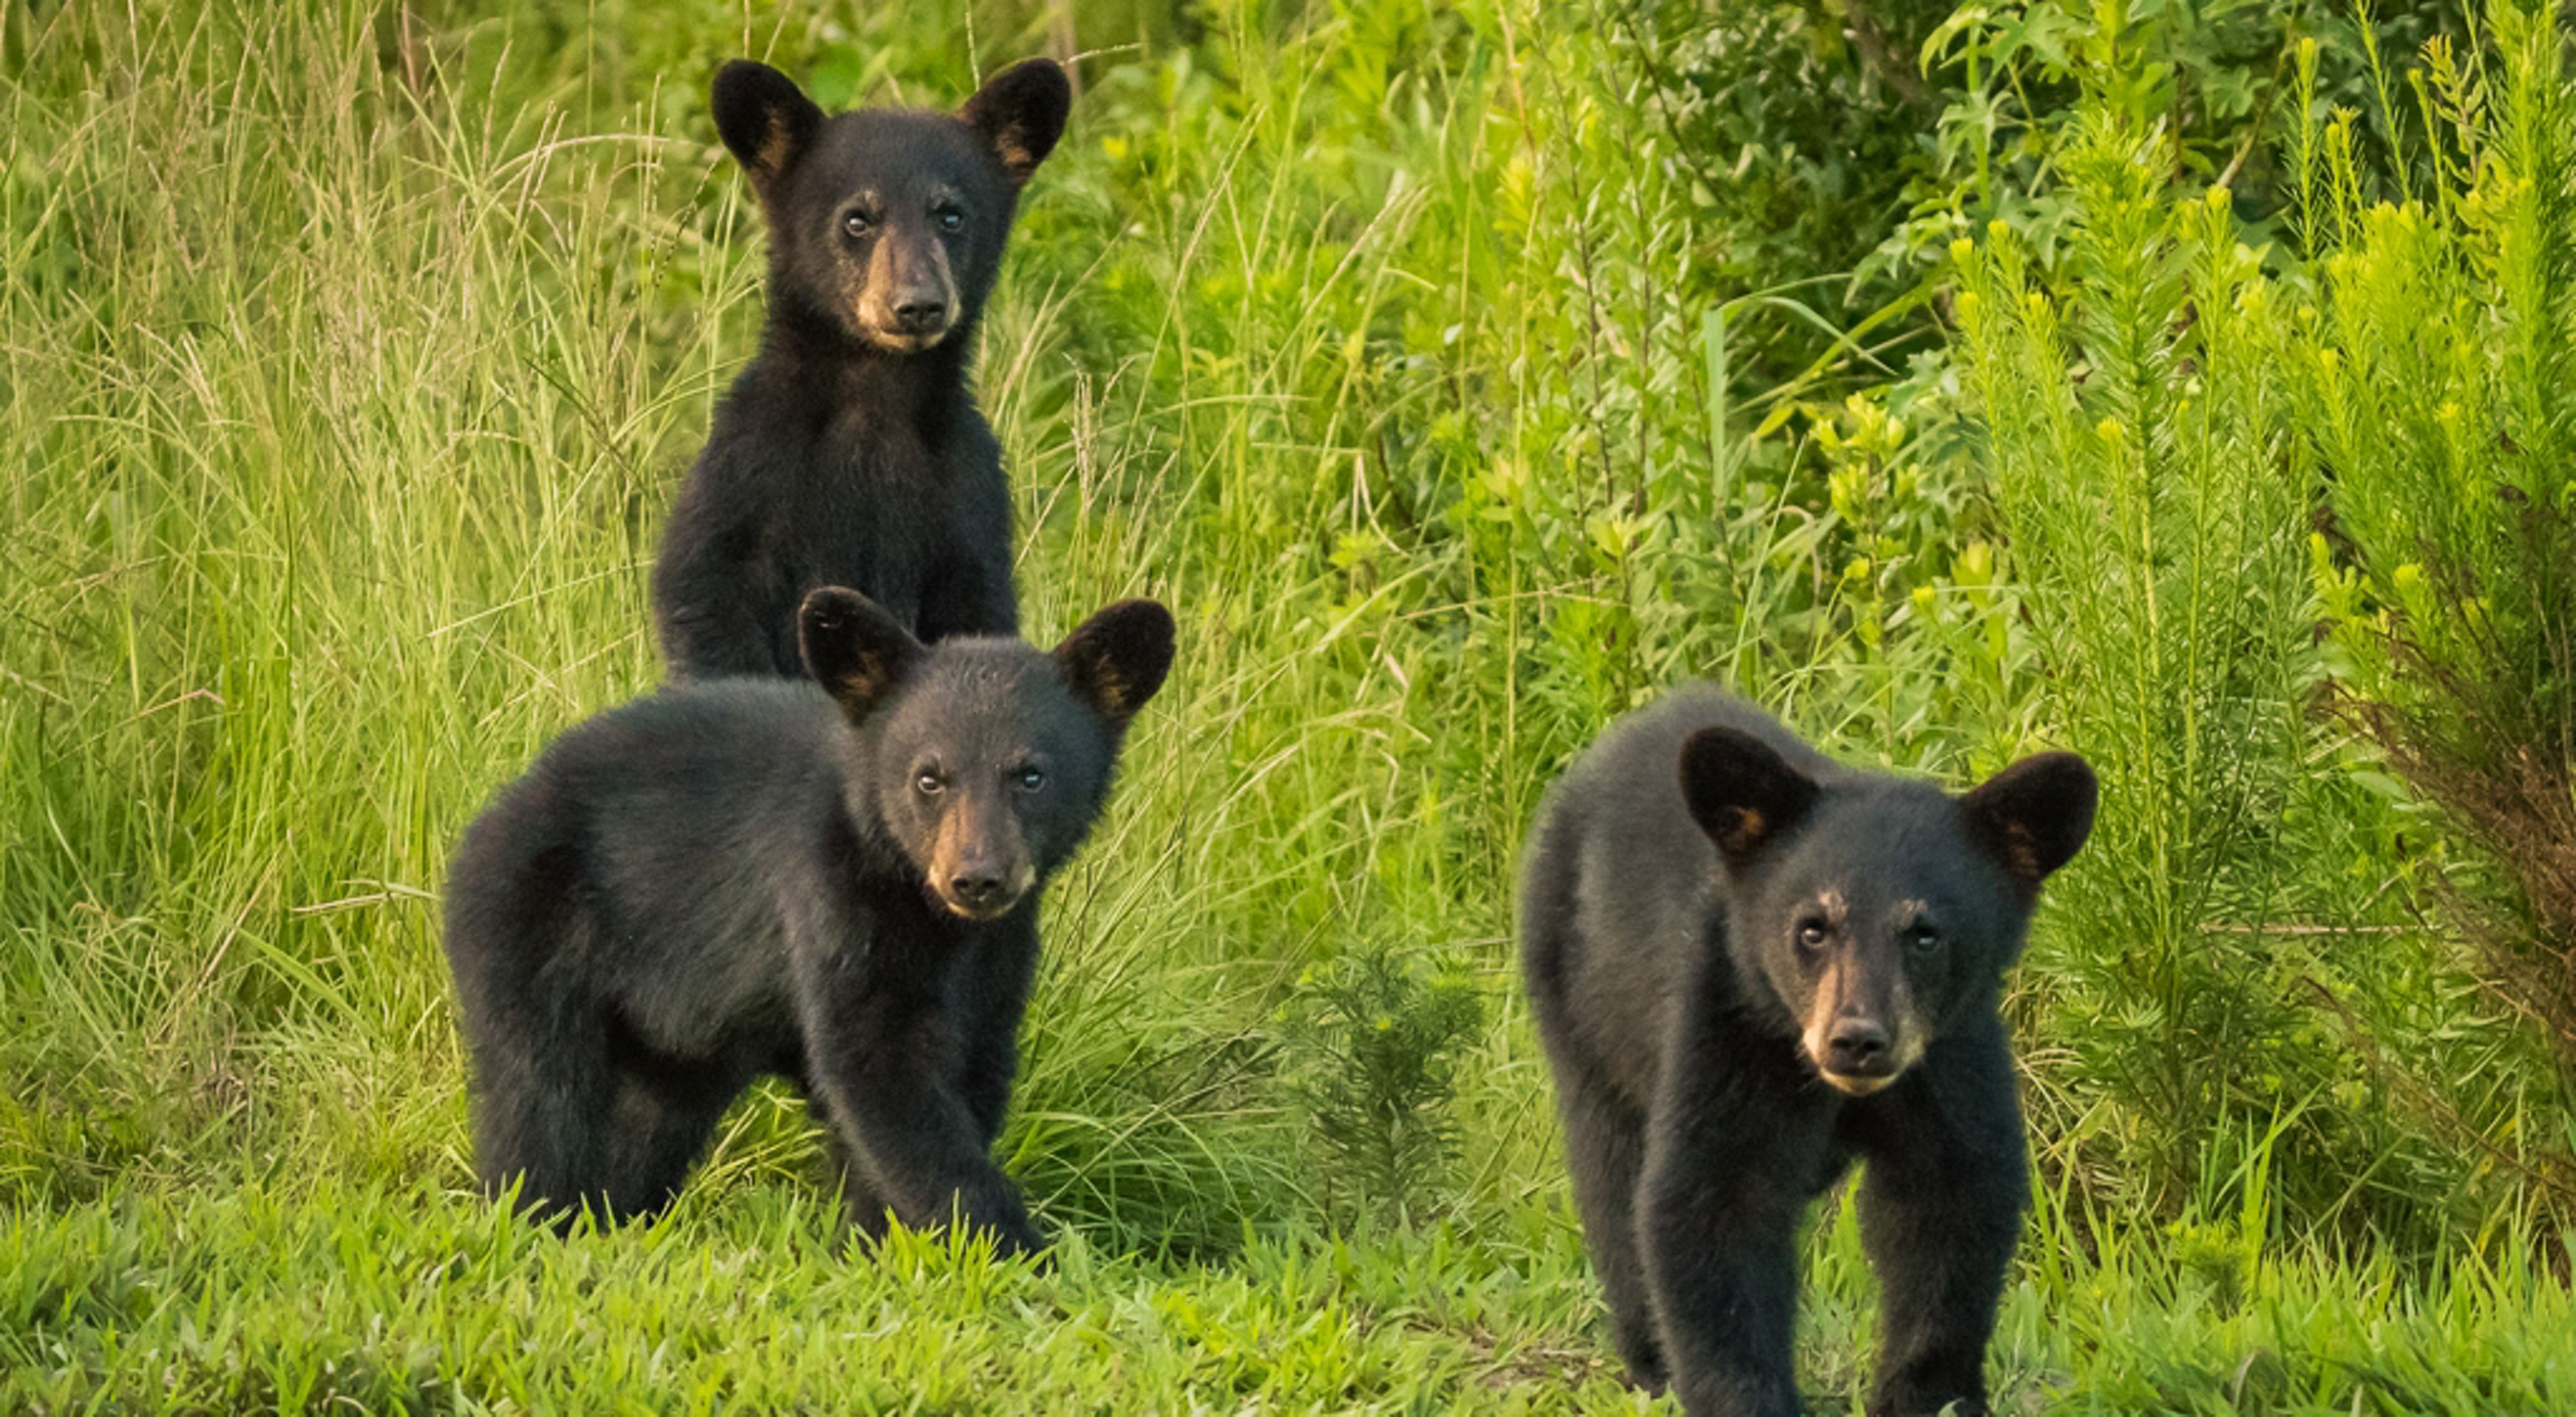 Three young bears walk across a grassy field.